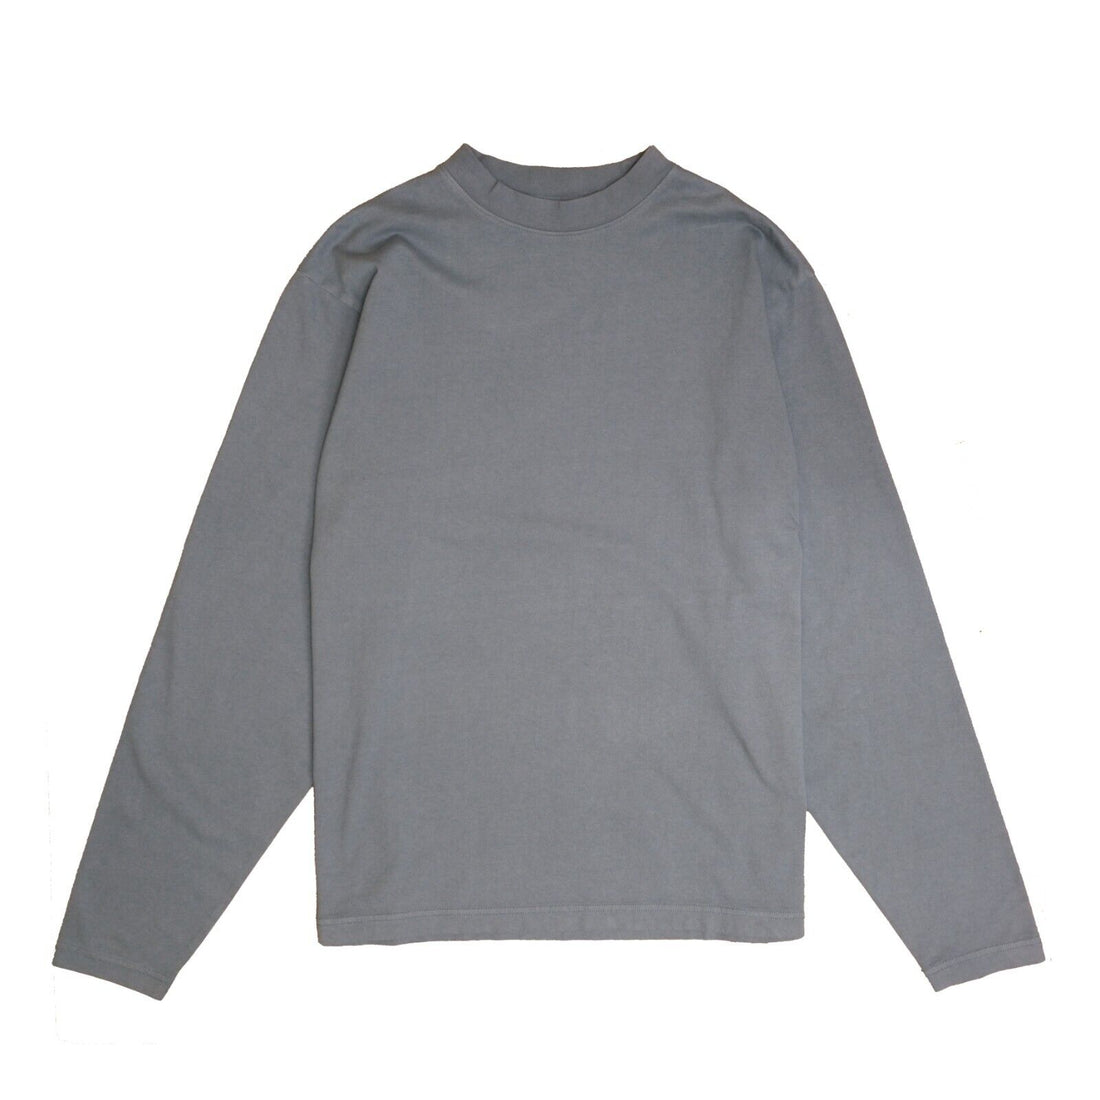 Yeezy Gap Unreleased Long Sleeve T-Shirt Size Medium Dark Gray